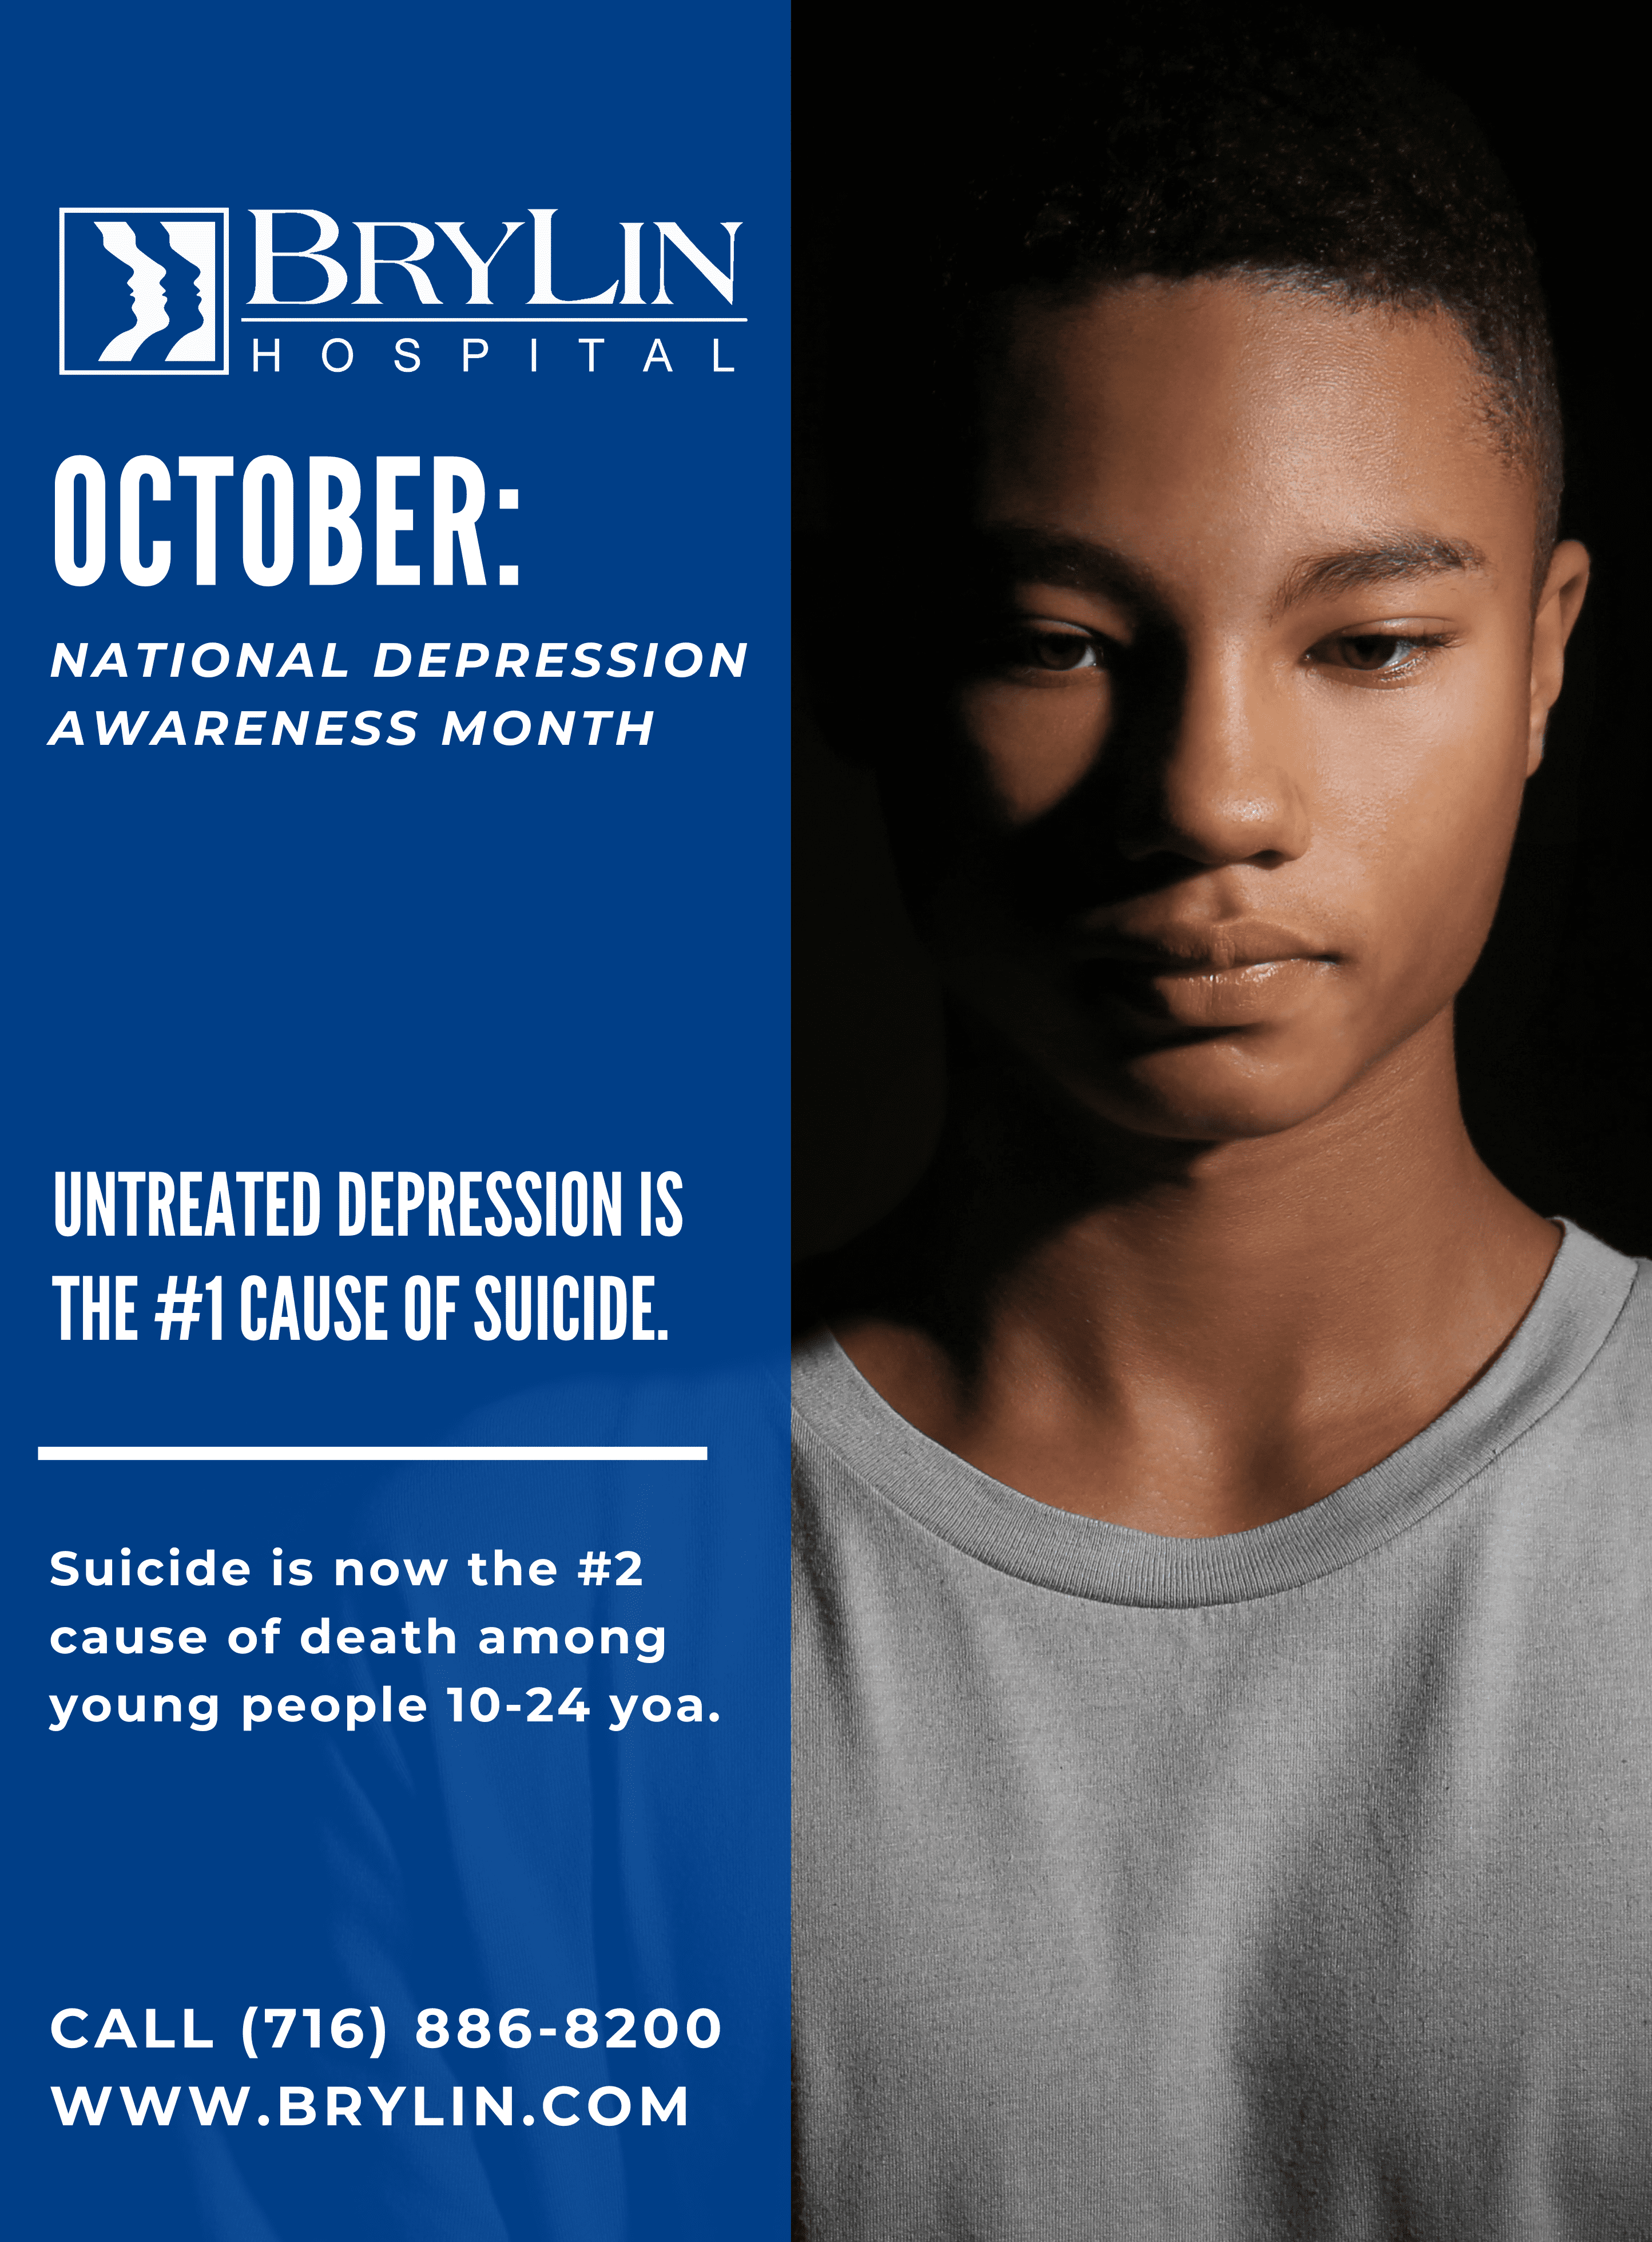 National Depression Awareness Month